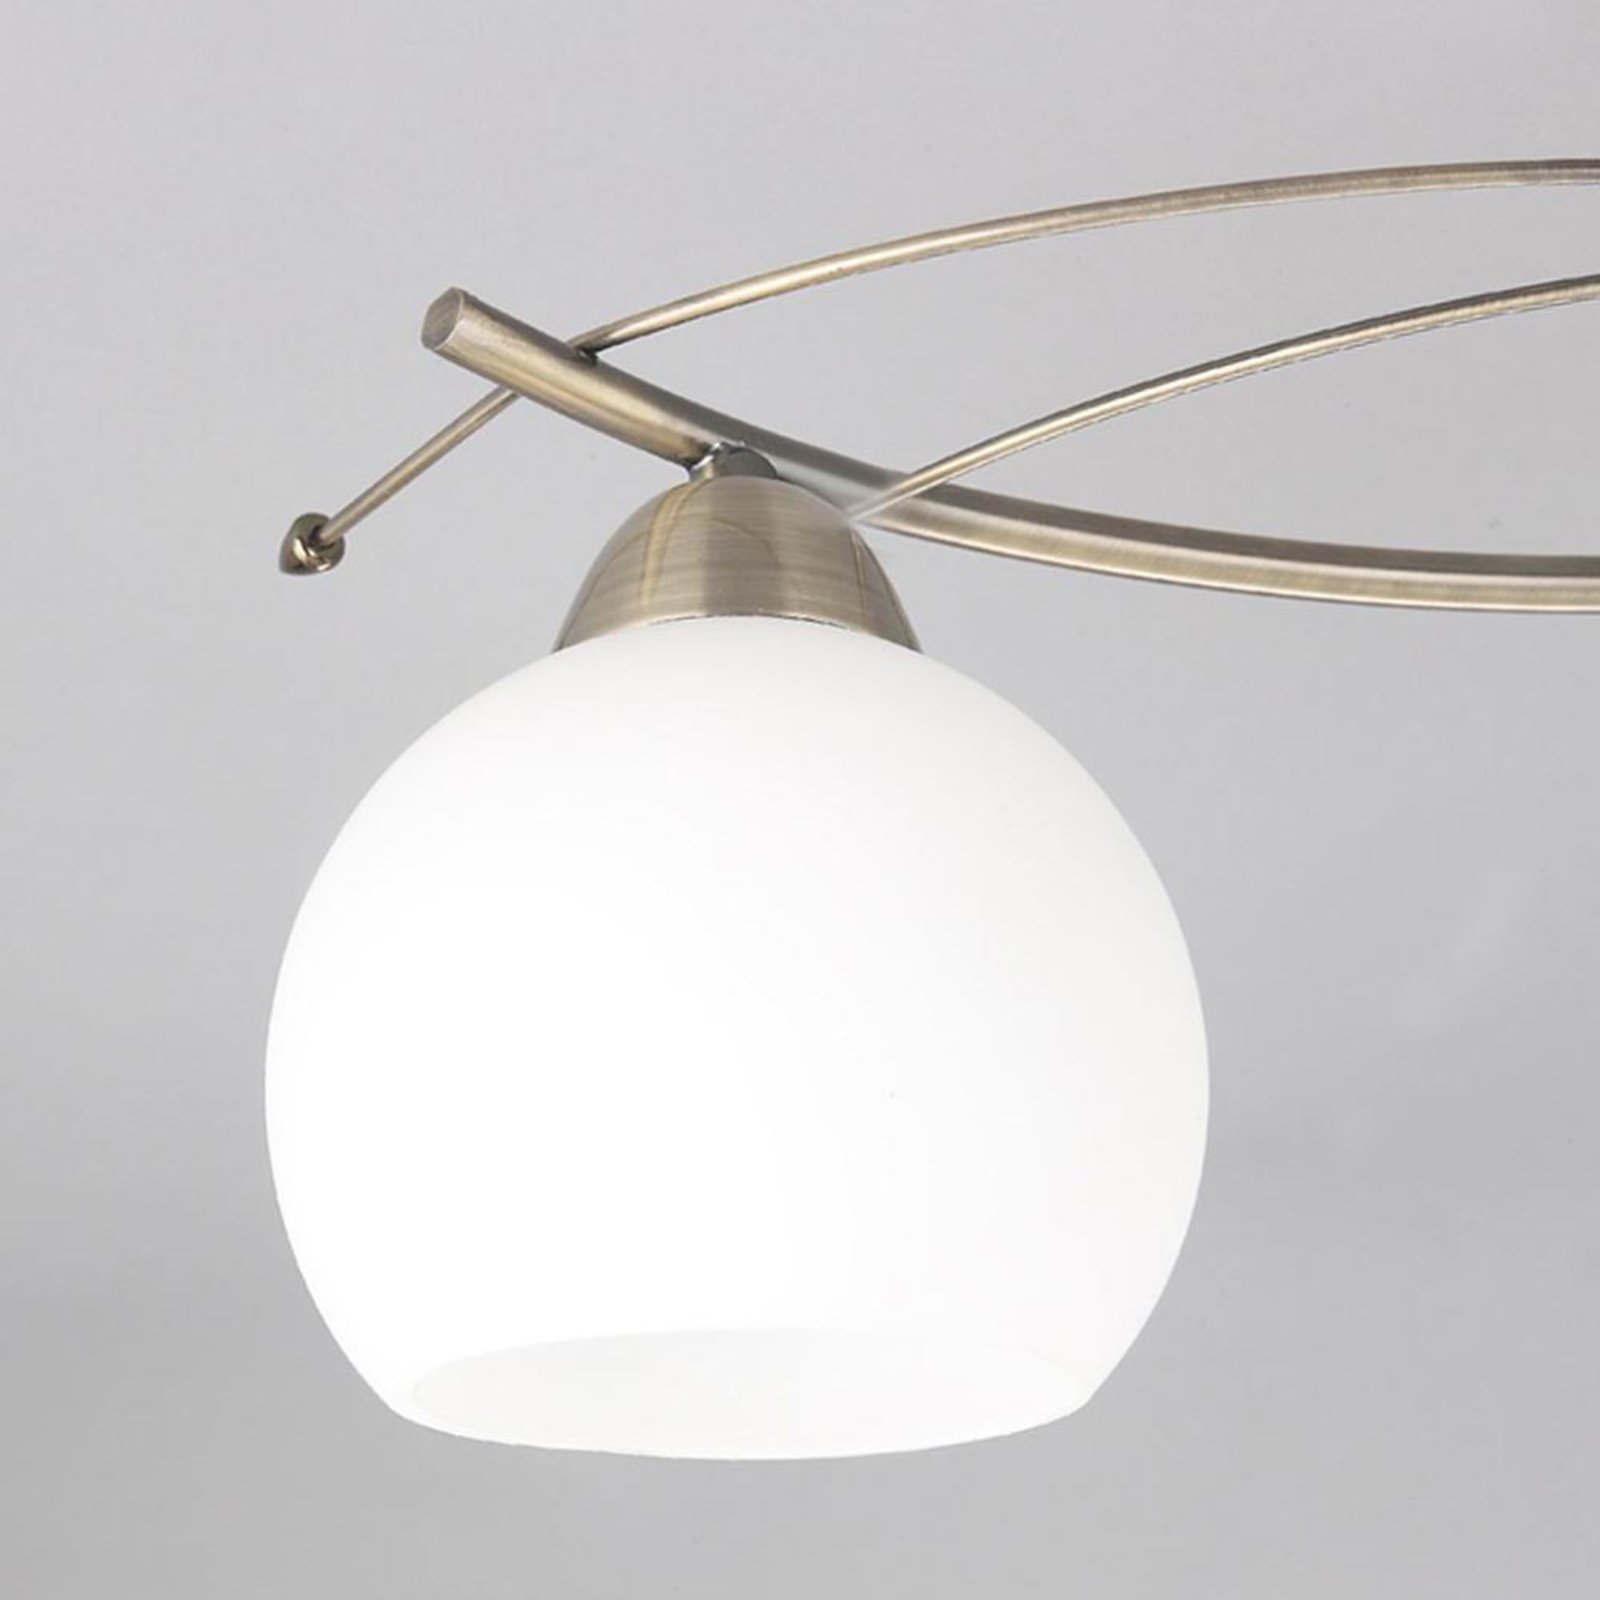 4-bulb ceiling lamp Leanda